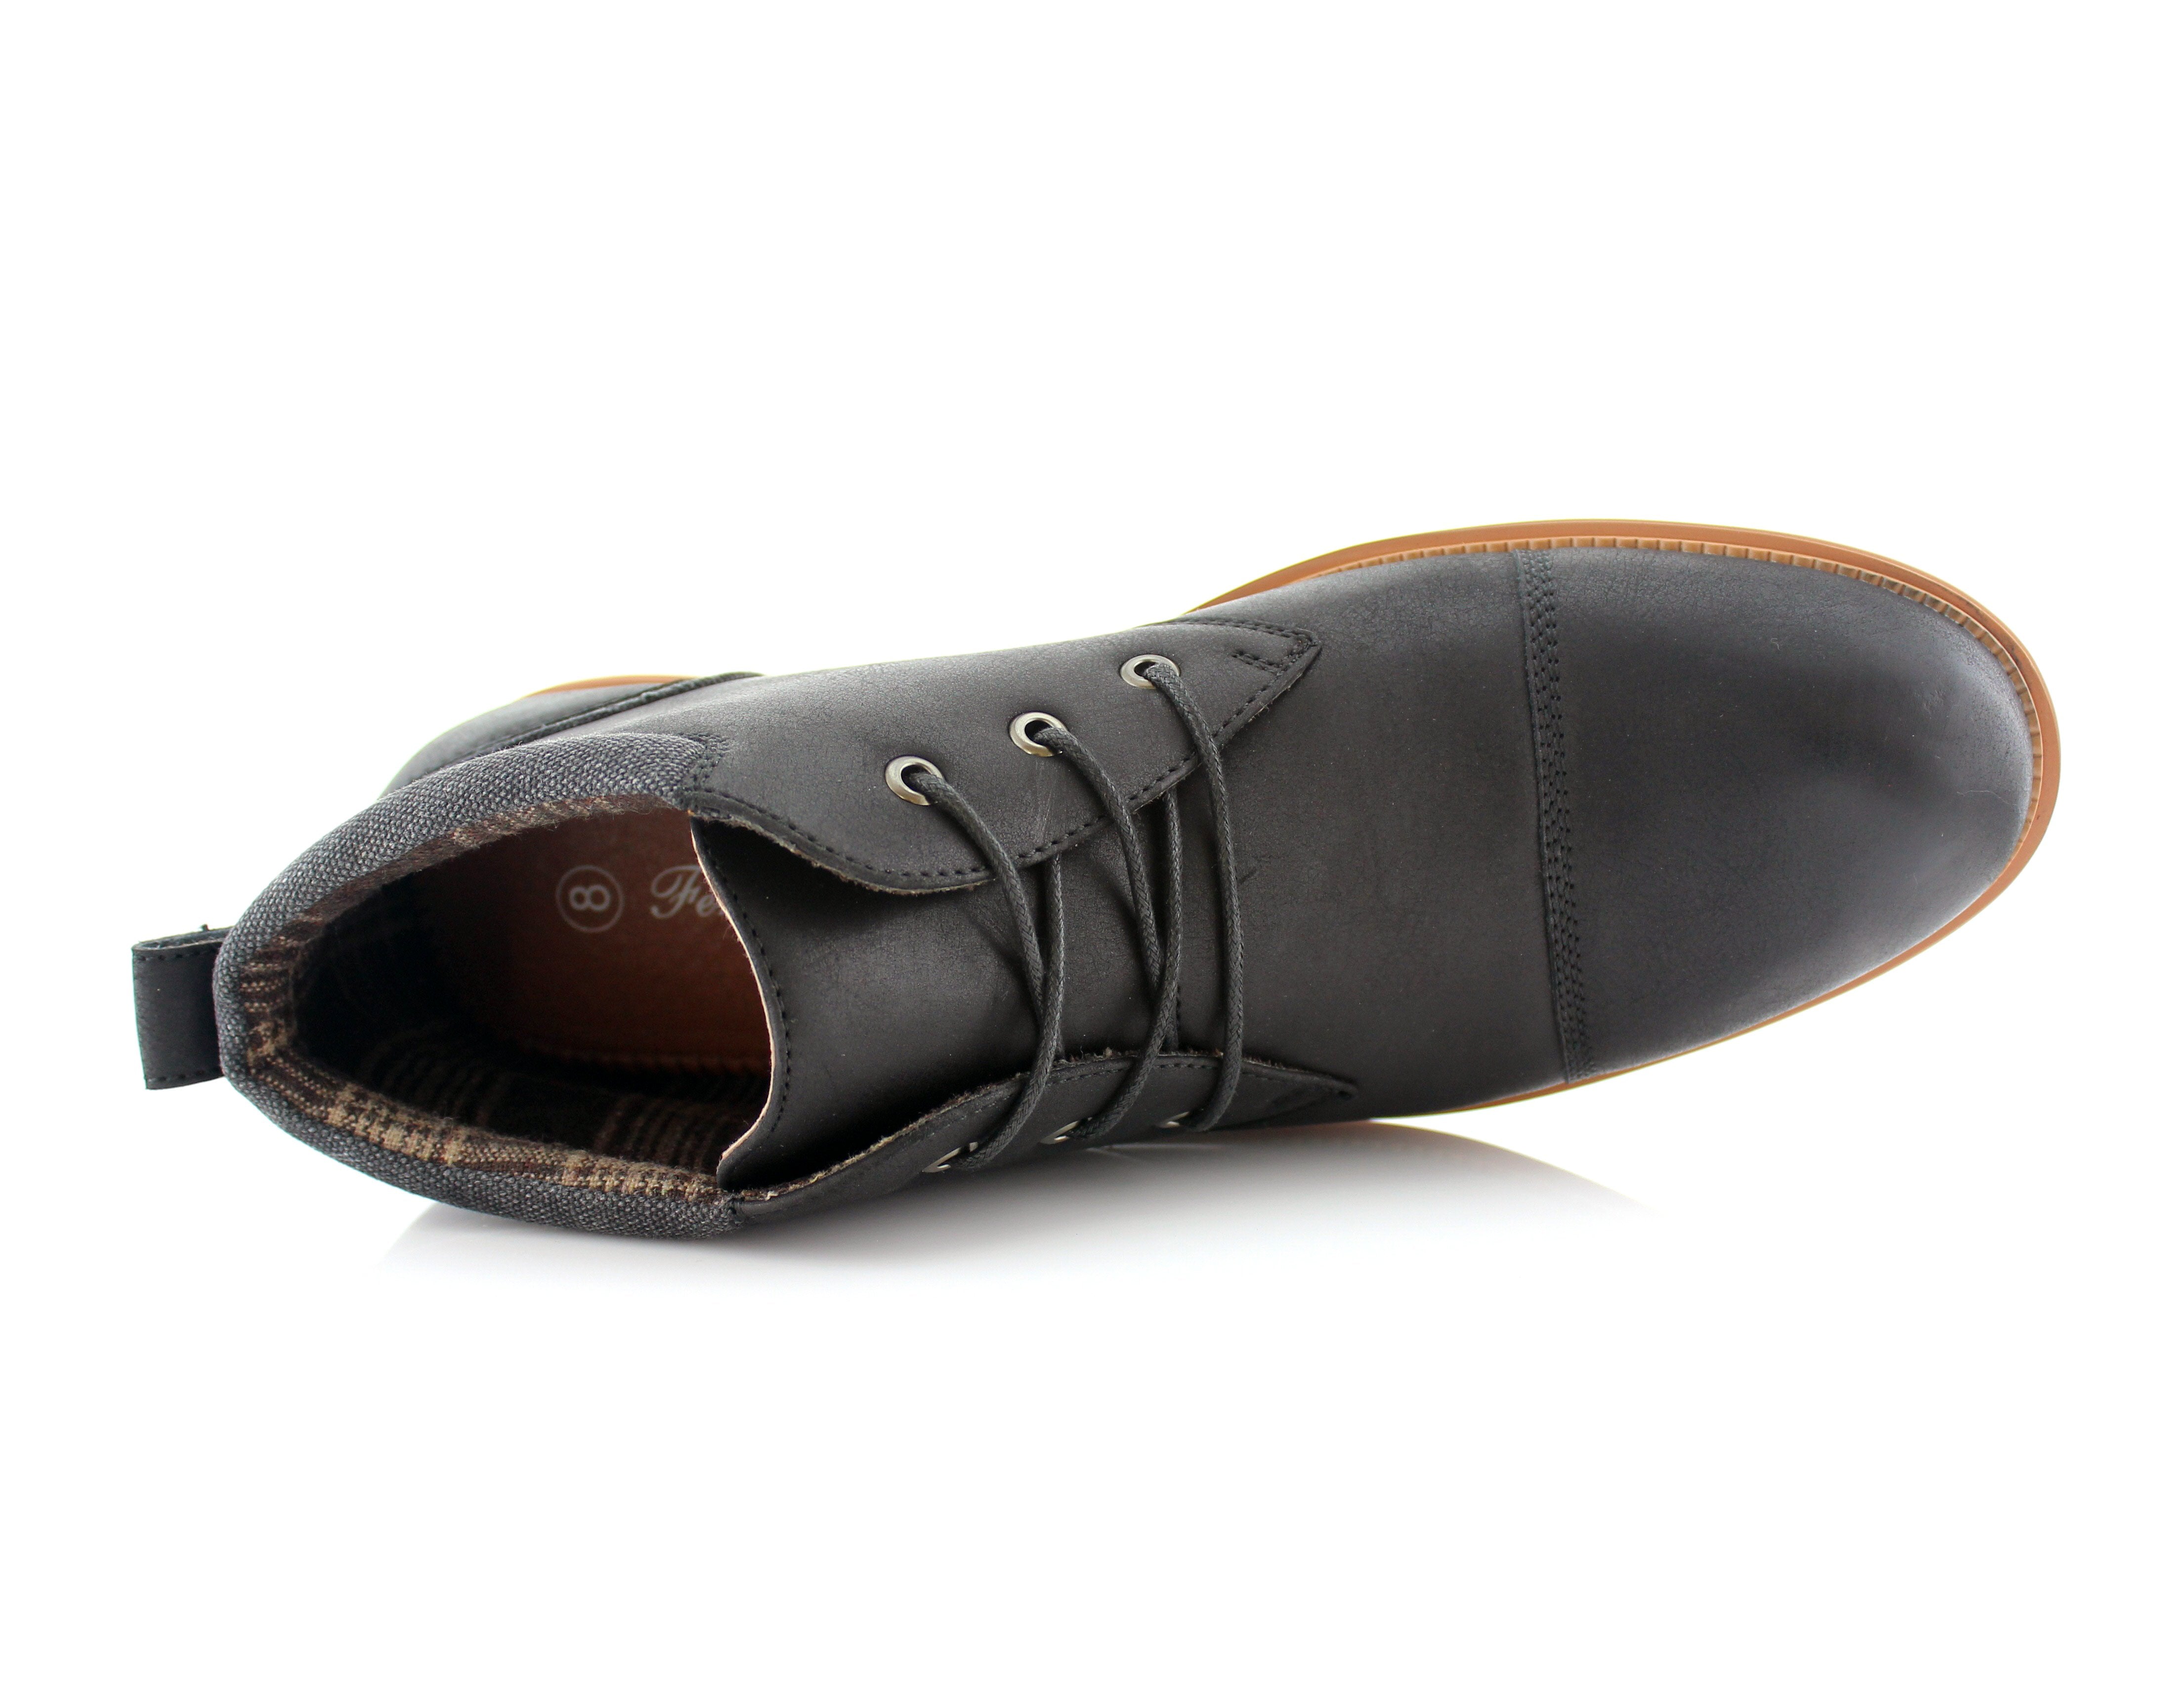 Cap-Toe Chukka Boots | Sammy by Ferro Aldo | Conal Footwear | Top-Down Angle View